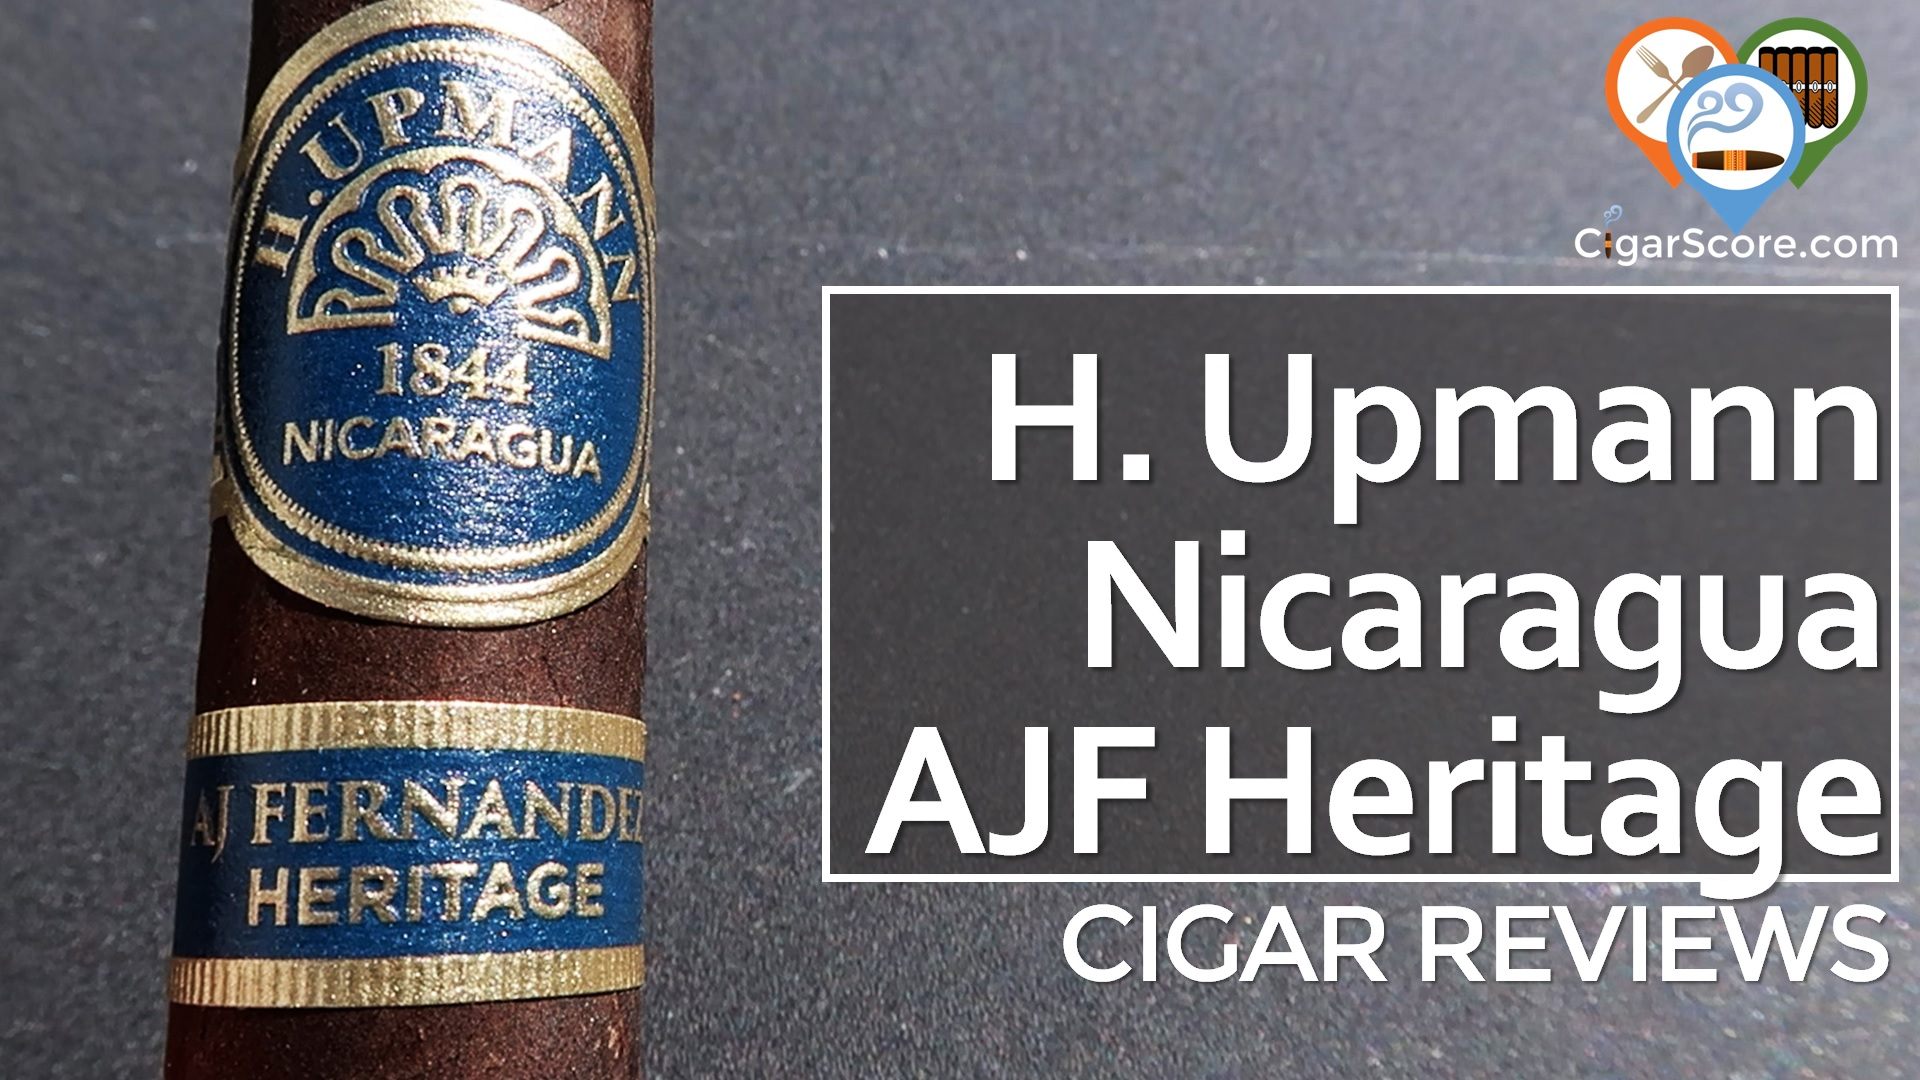 Cigar Review: H. Upmann Nicaragua AJ Fernandez Heritage Toro